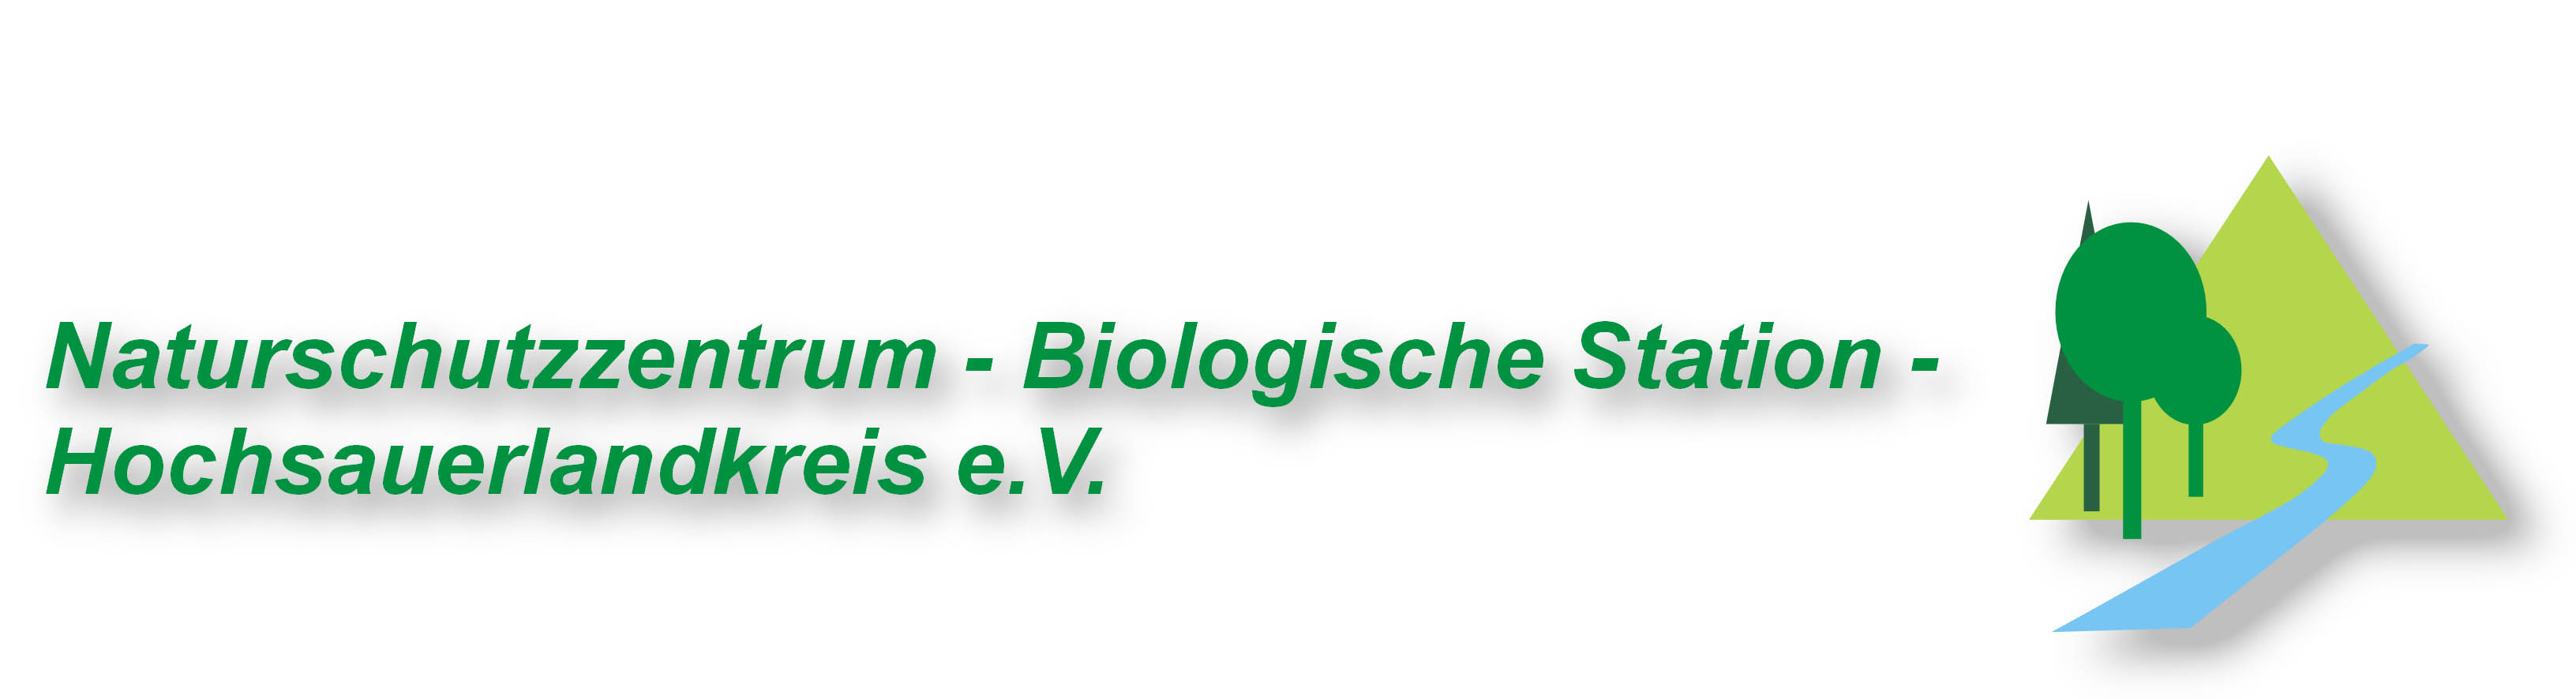 Logo Biologische Station HSK